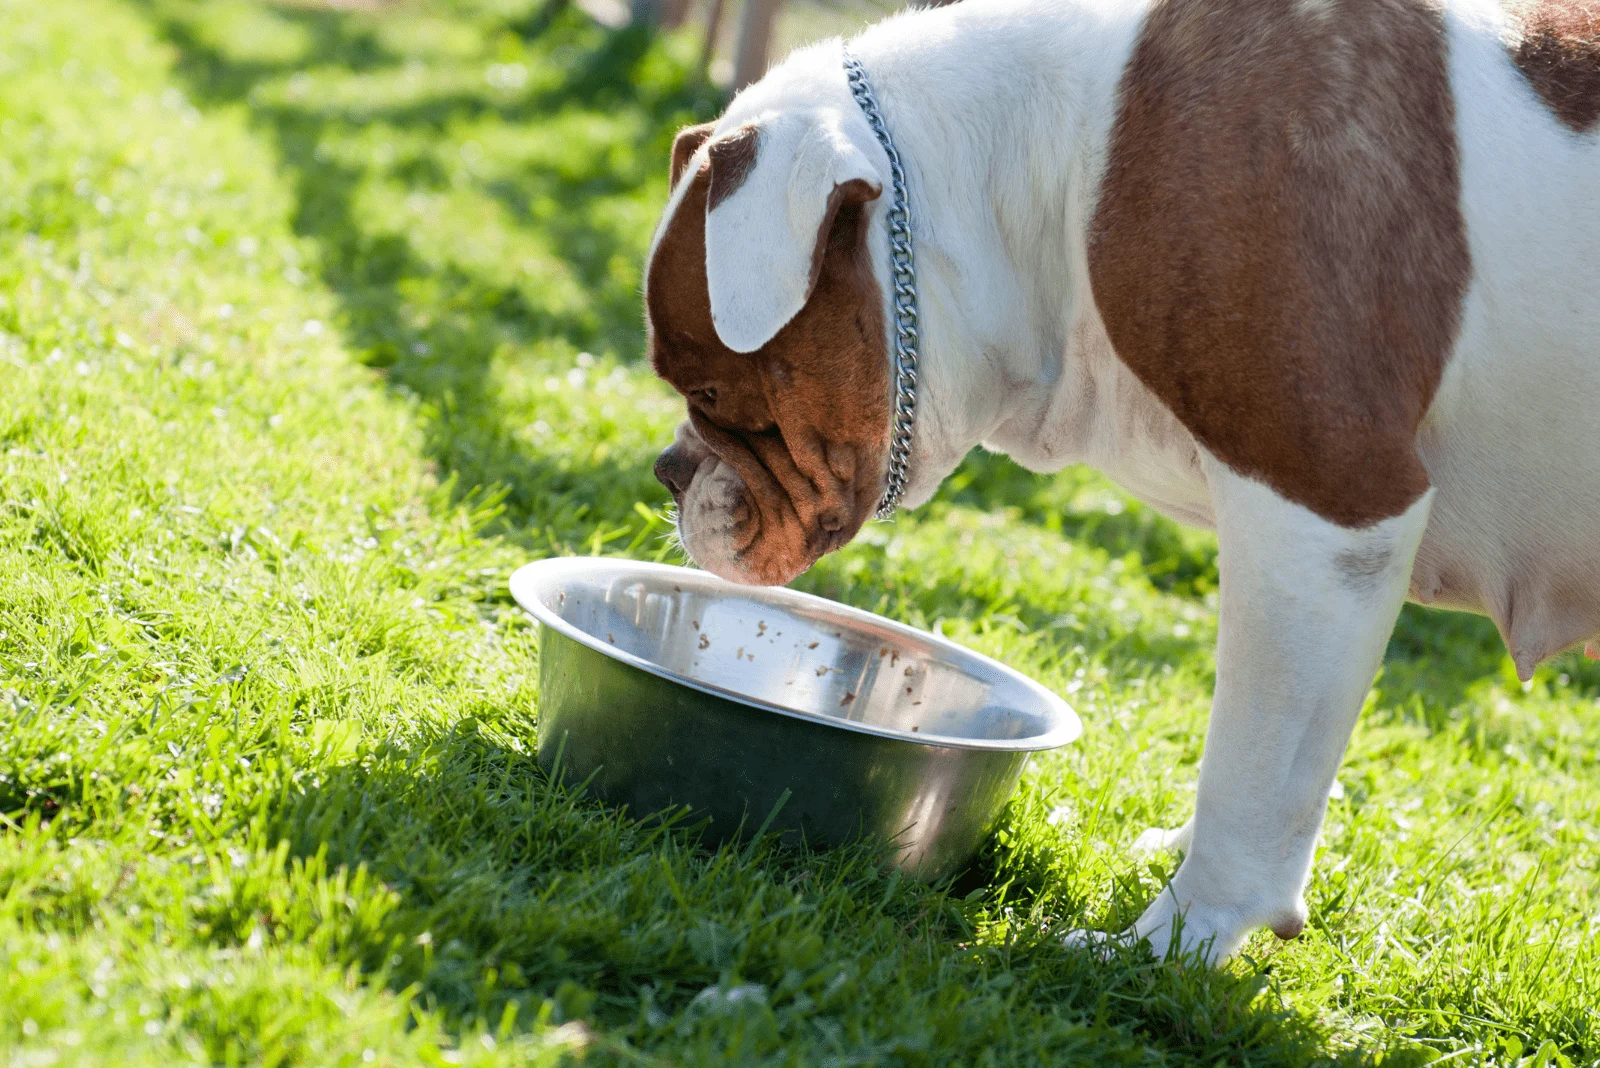 American Bulldog Puppy eats from a bowl